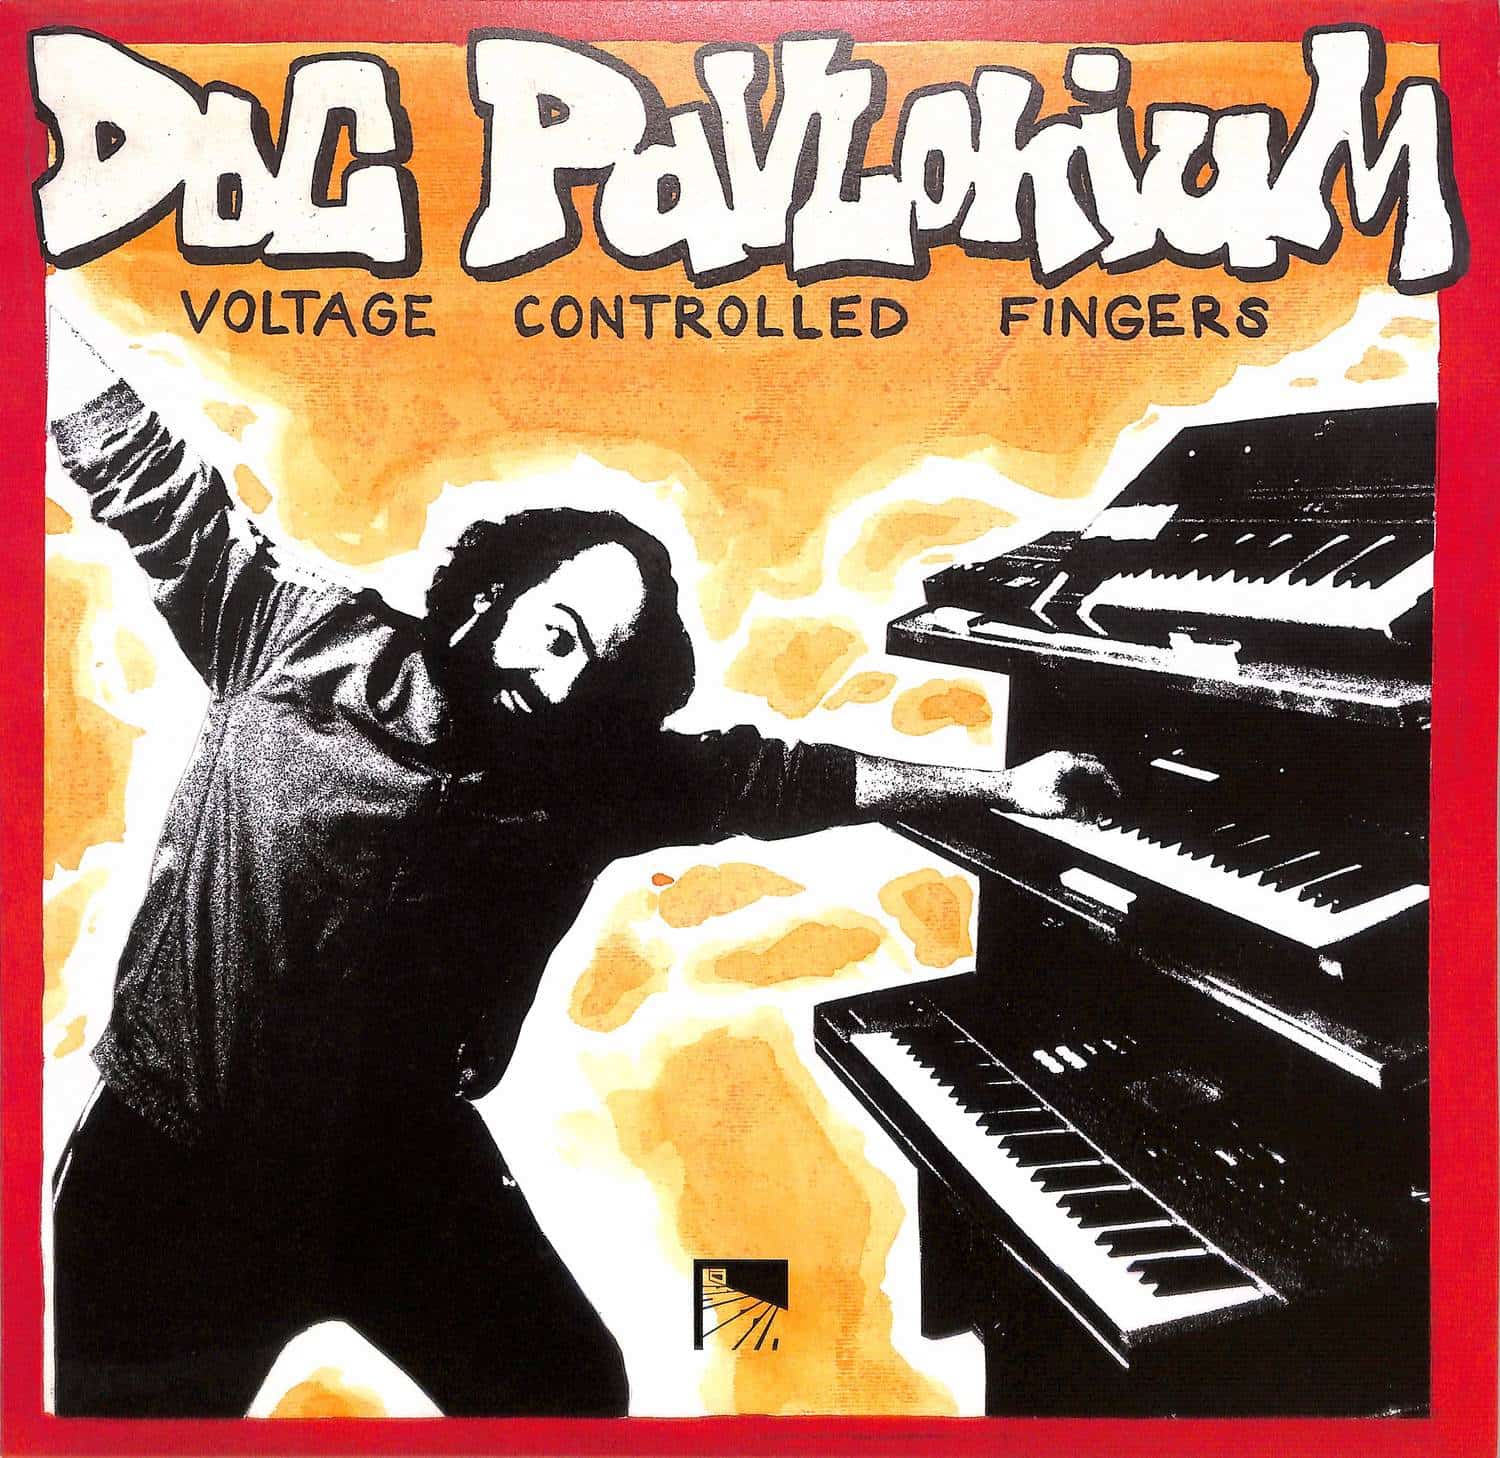 Doc Pavlonium - VOLTAGE CONTROLLED FINGERS